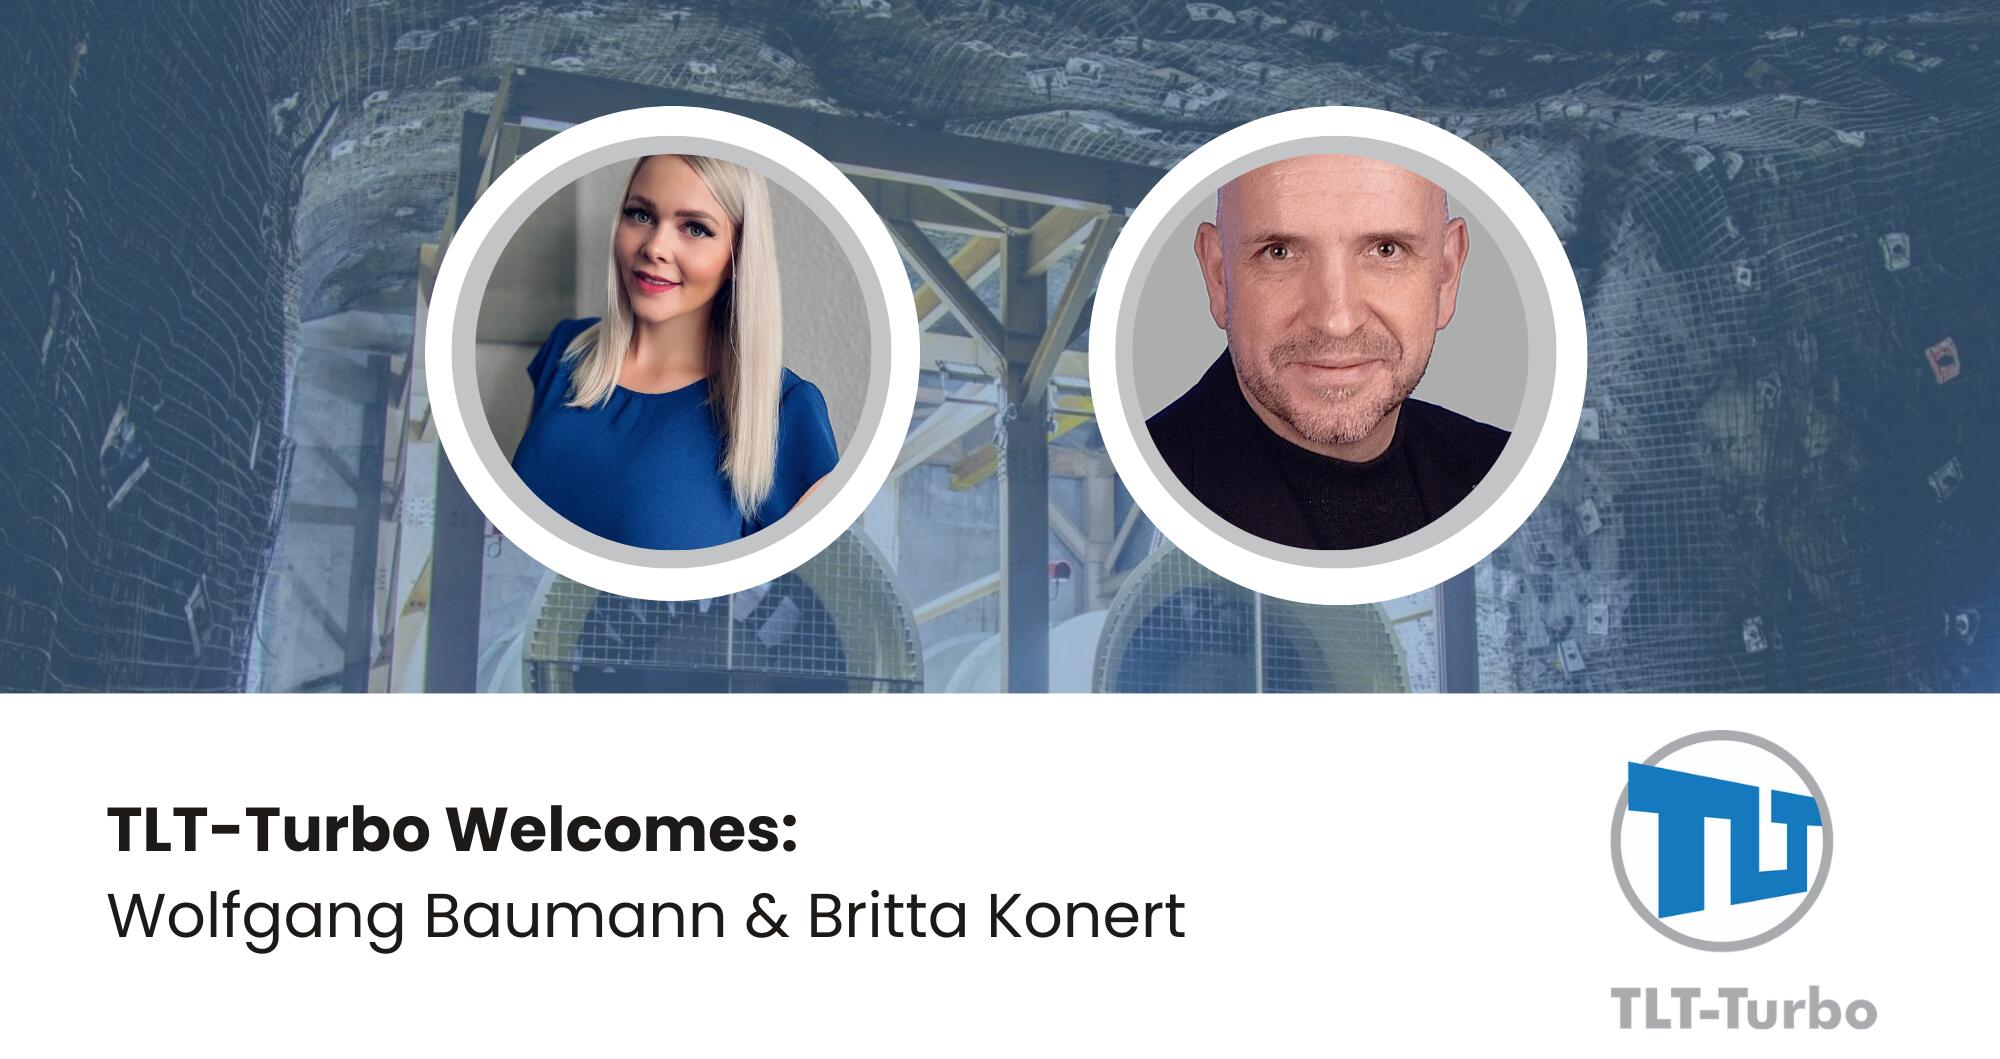 TLT-Turbo Welcomes Wolfgang Baumann and Britta Konert to their Sales Team